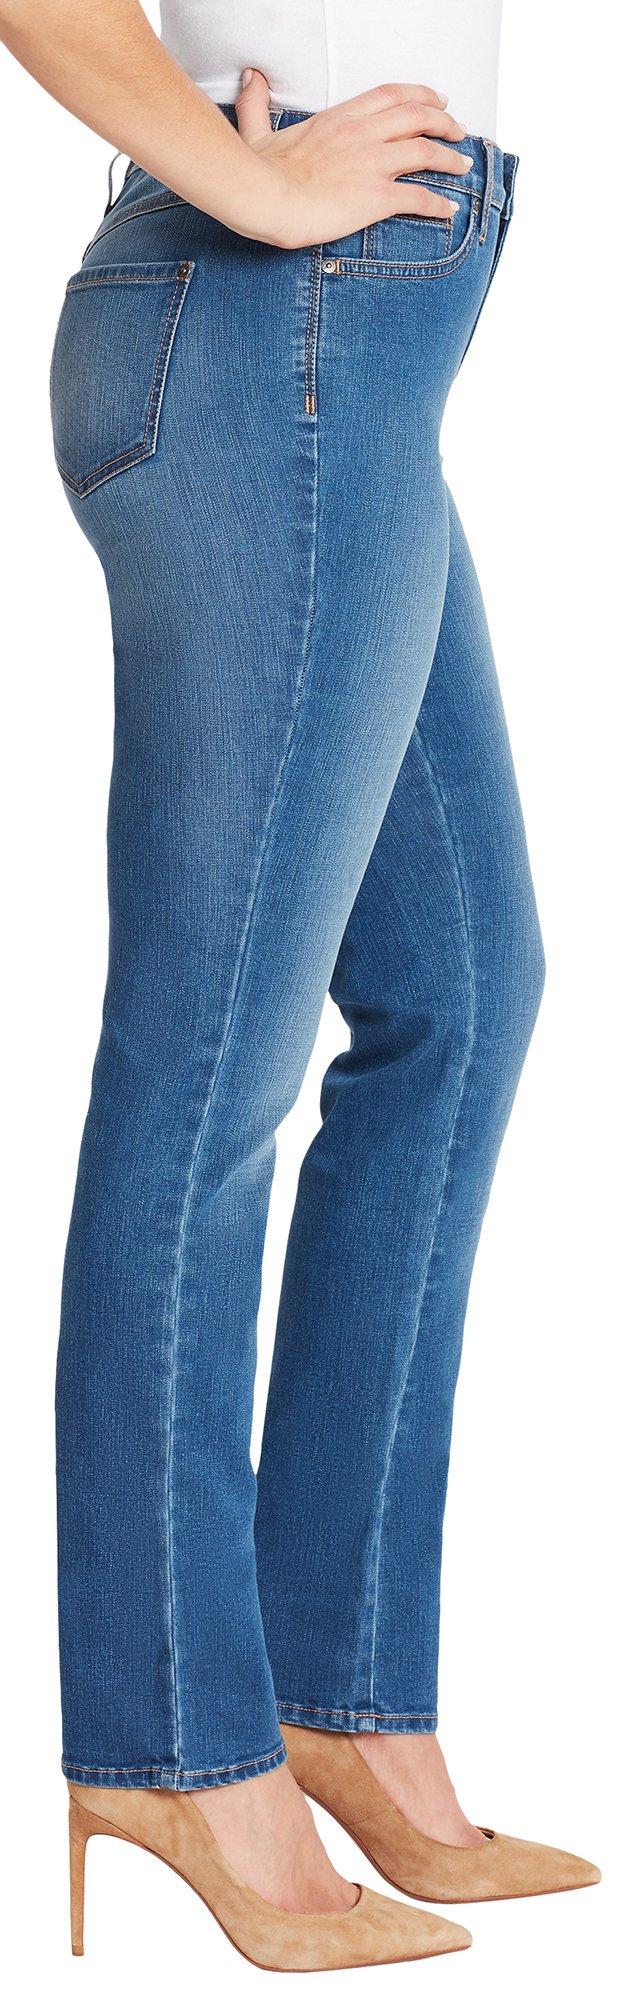 gloria vanderbilt rail straight leg jeans